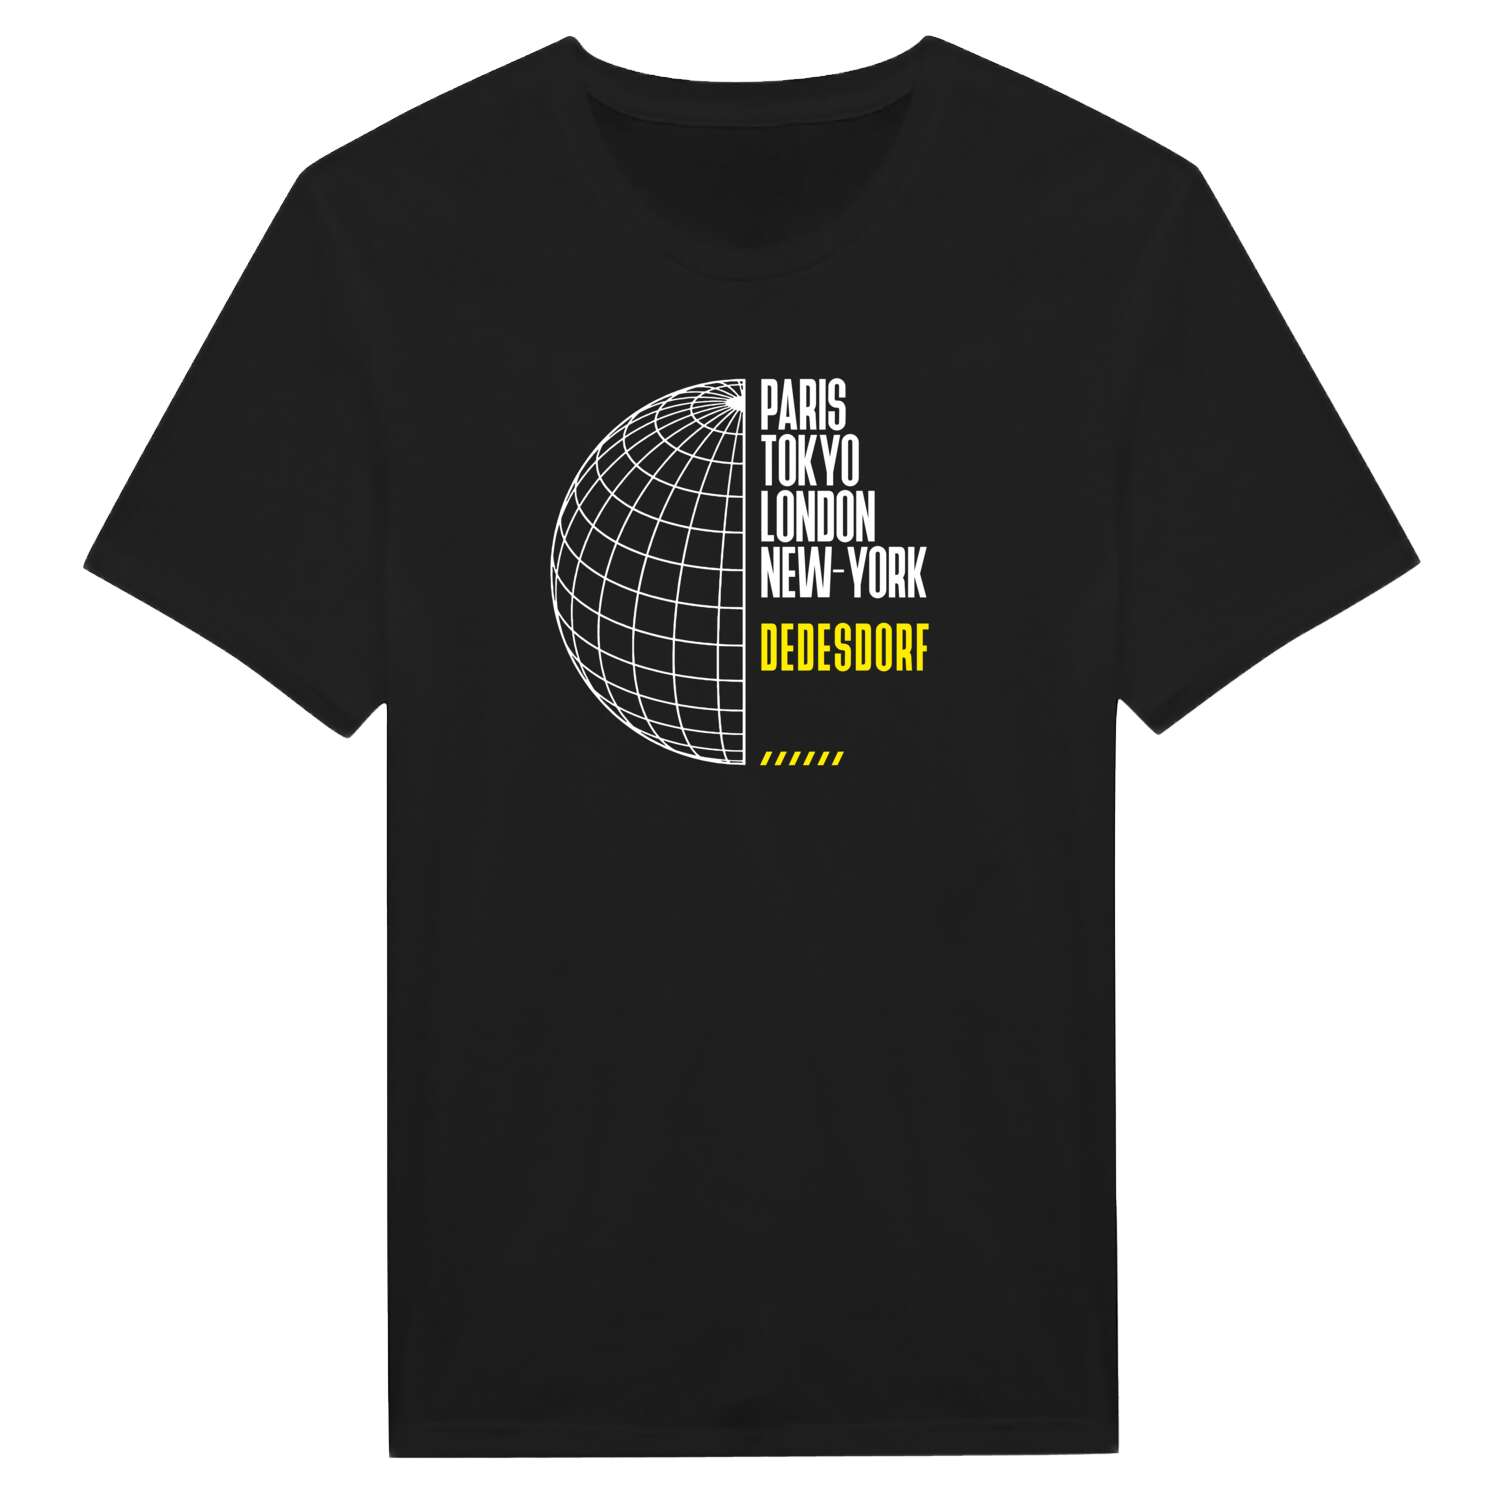 Dedesdorf T-Shirt »Paris Tokyo London«